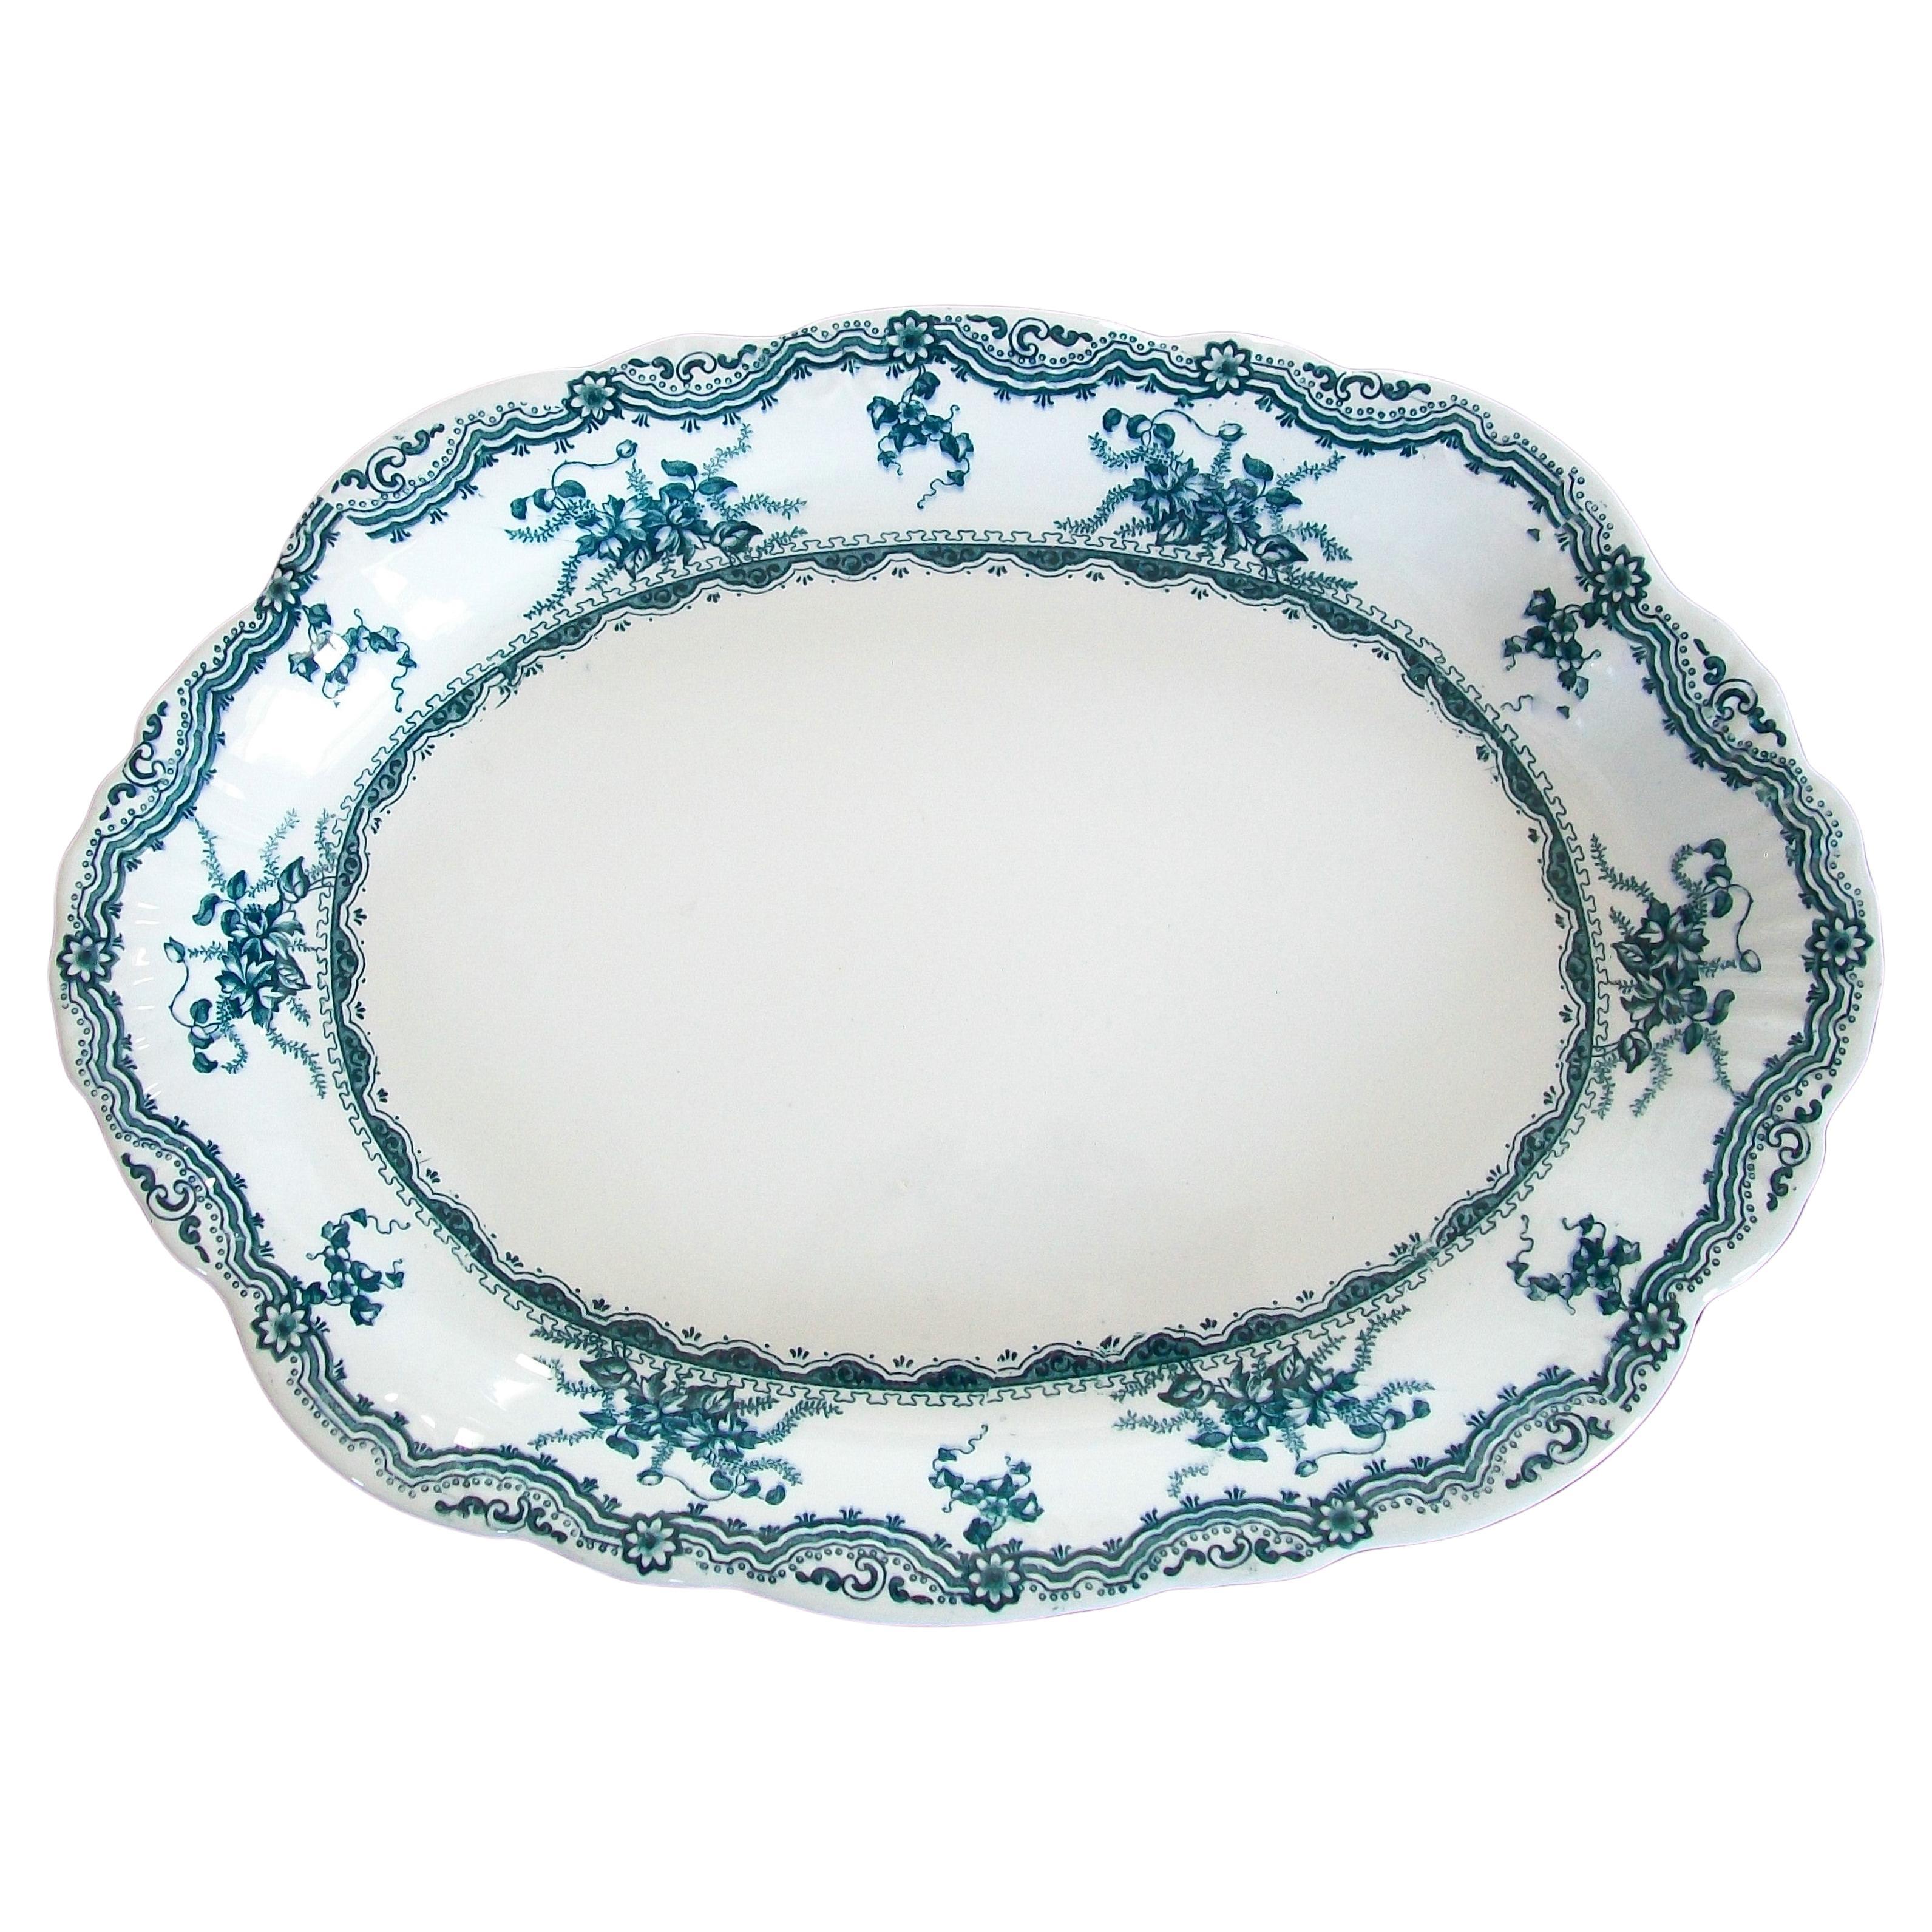 Baker & Co. Ltd, Antique Blue Transfer Decorated Platter, U.K, circa 1893